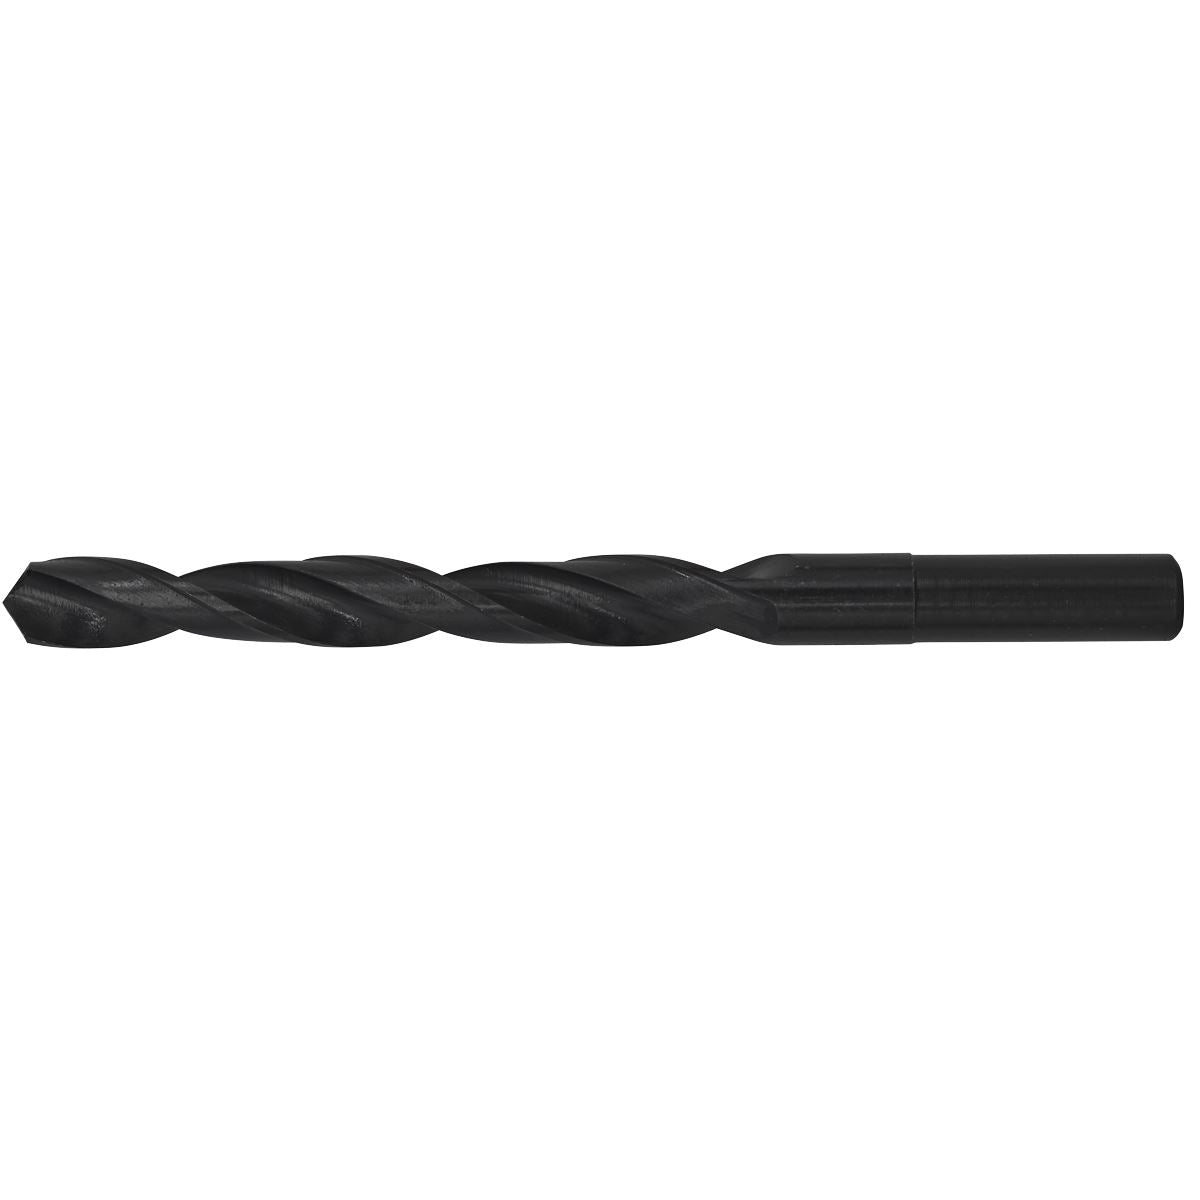 Sealey Blacksmith Bit - Ø10.5 x 130mm